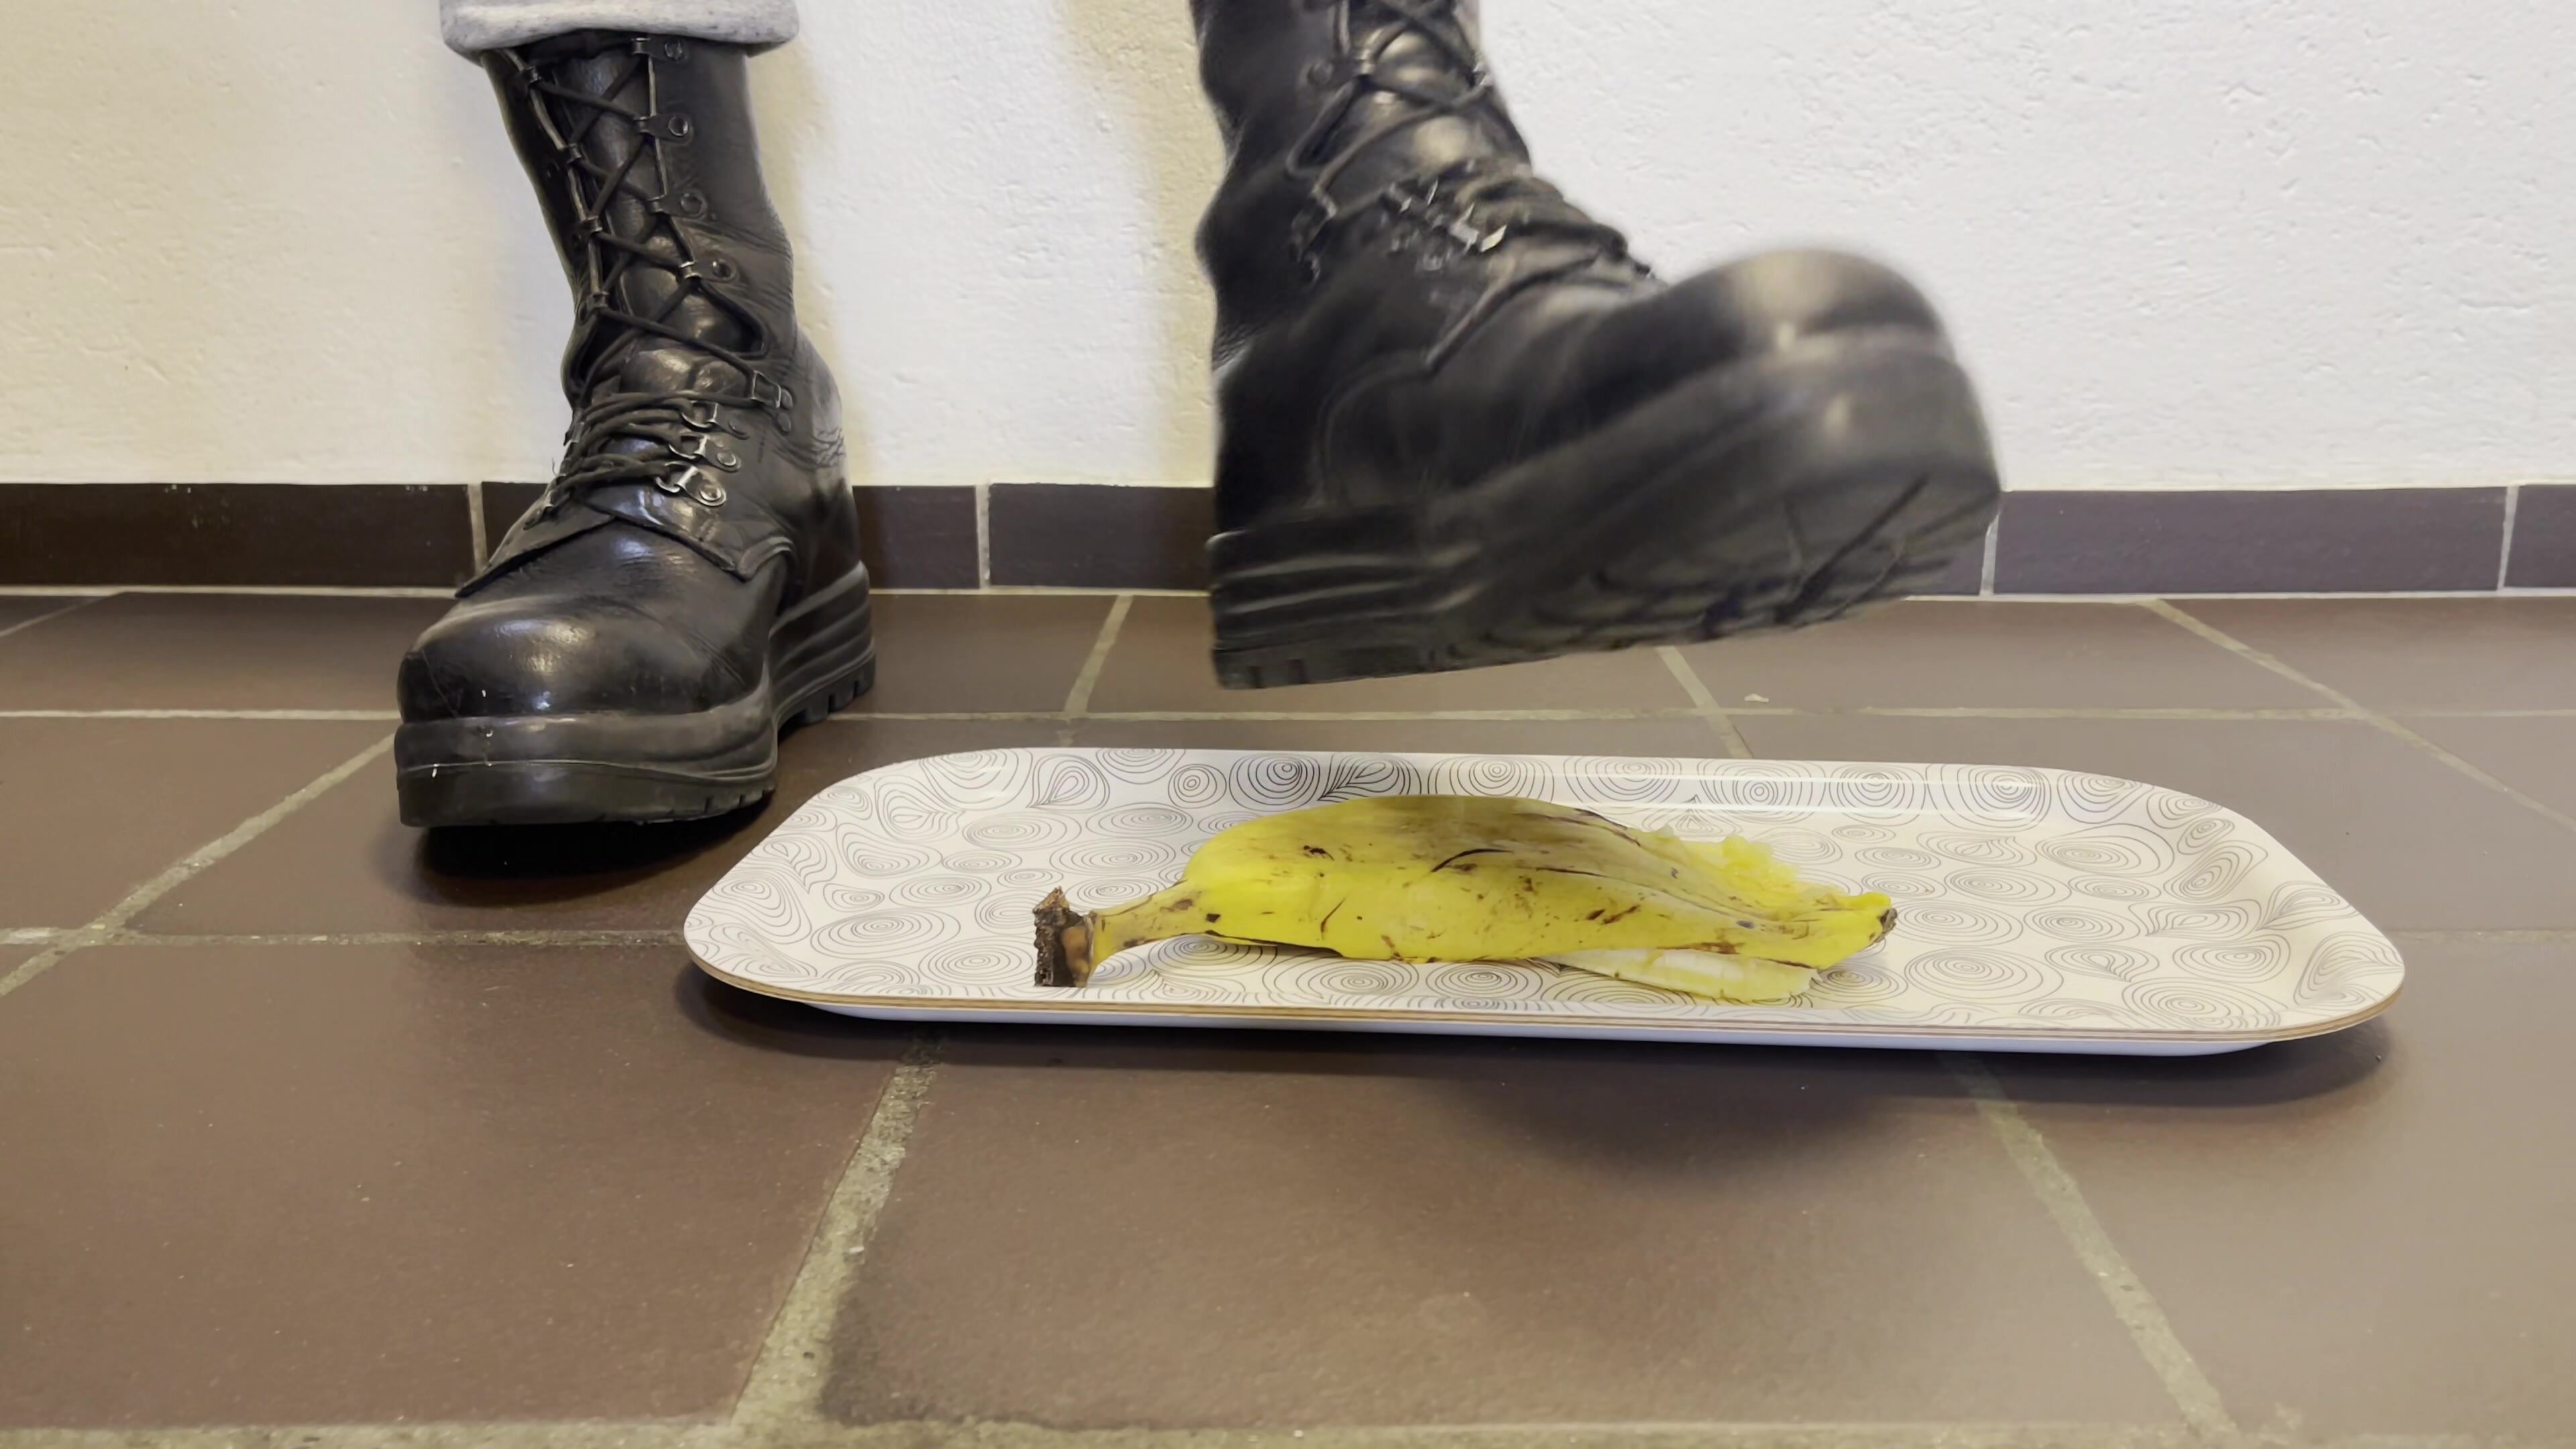 Swiss military Boots crushing a banana